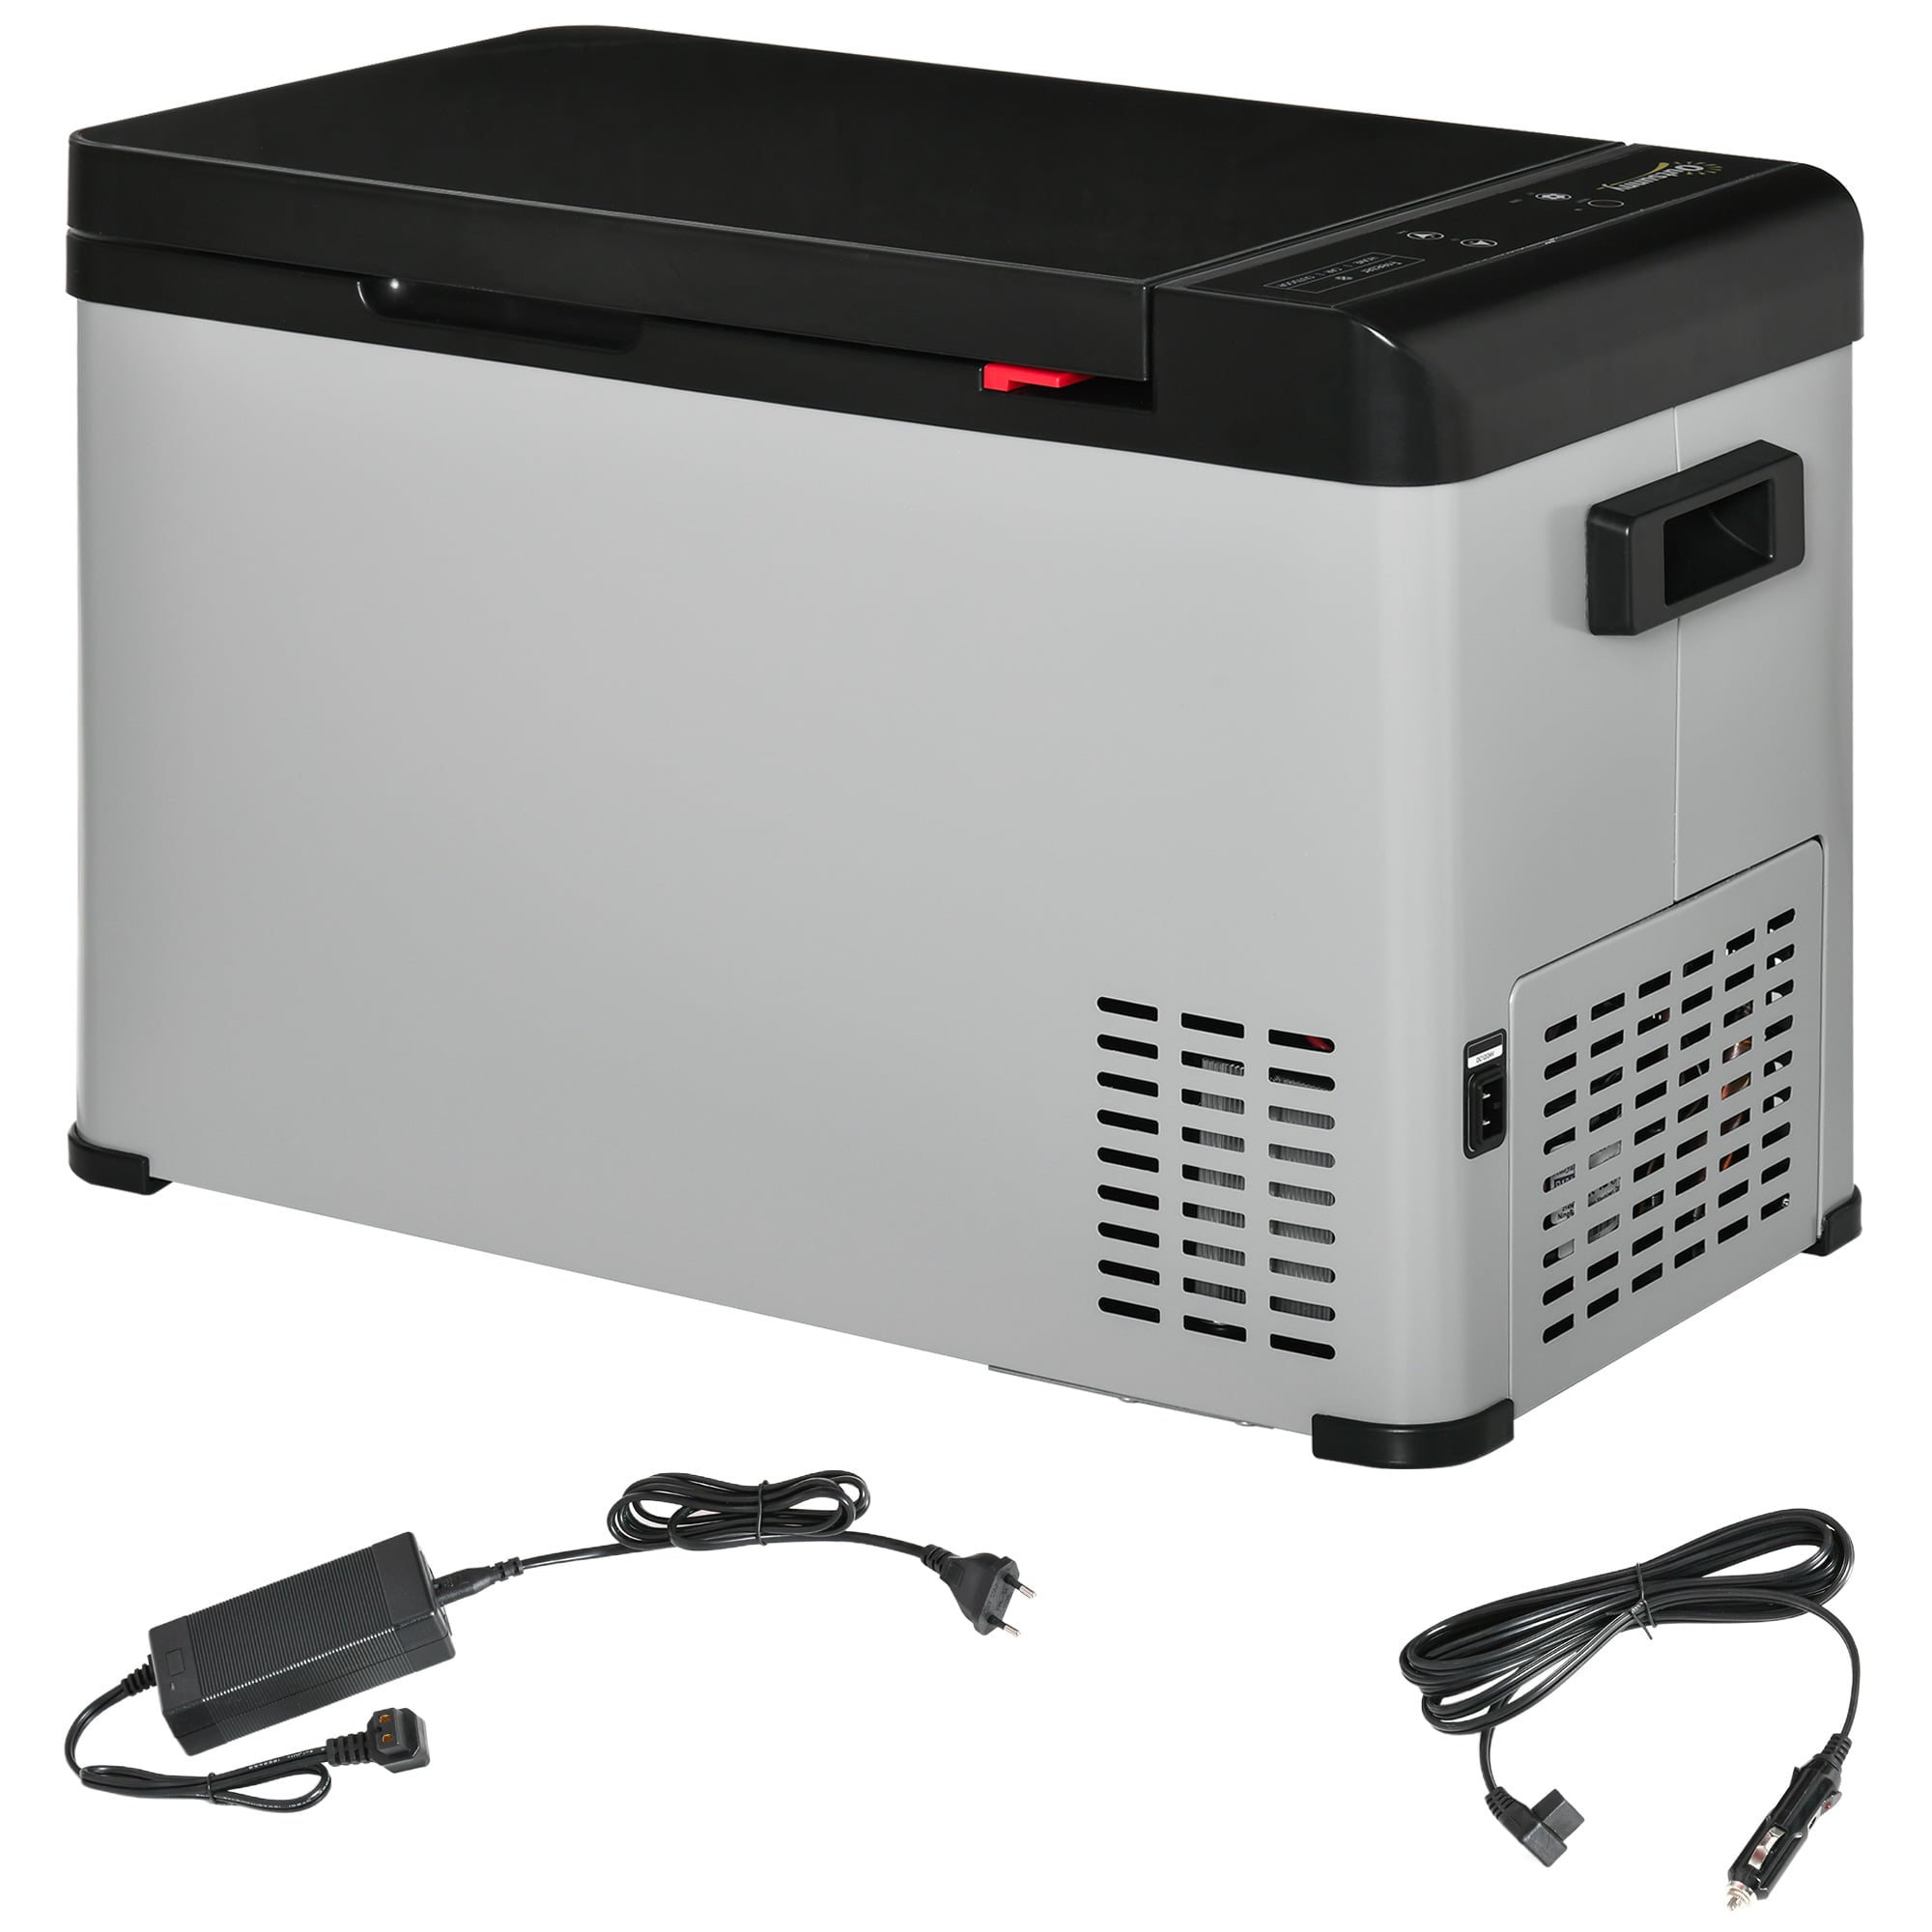 Outsunny 12 Volt Car Refrigerator, 29 Quart (27L) Portable Compressor Cooler, Fridge Freezer with 12/24V DC and 110-240V AC for Driving, Travel, Fishing, Outdoor